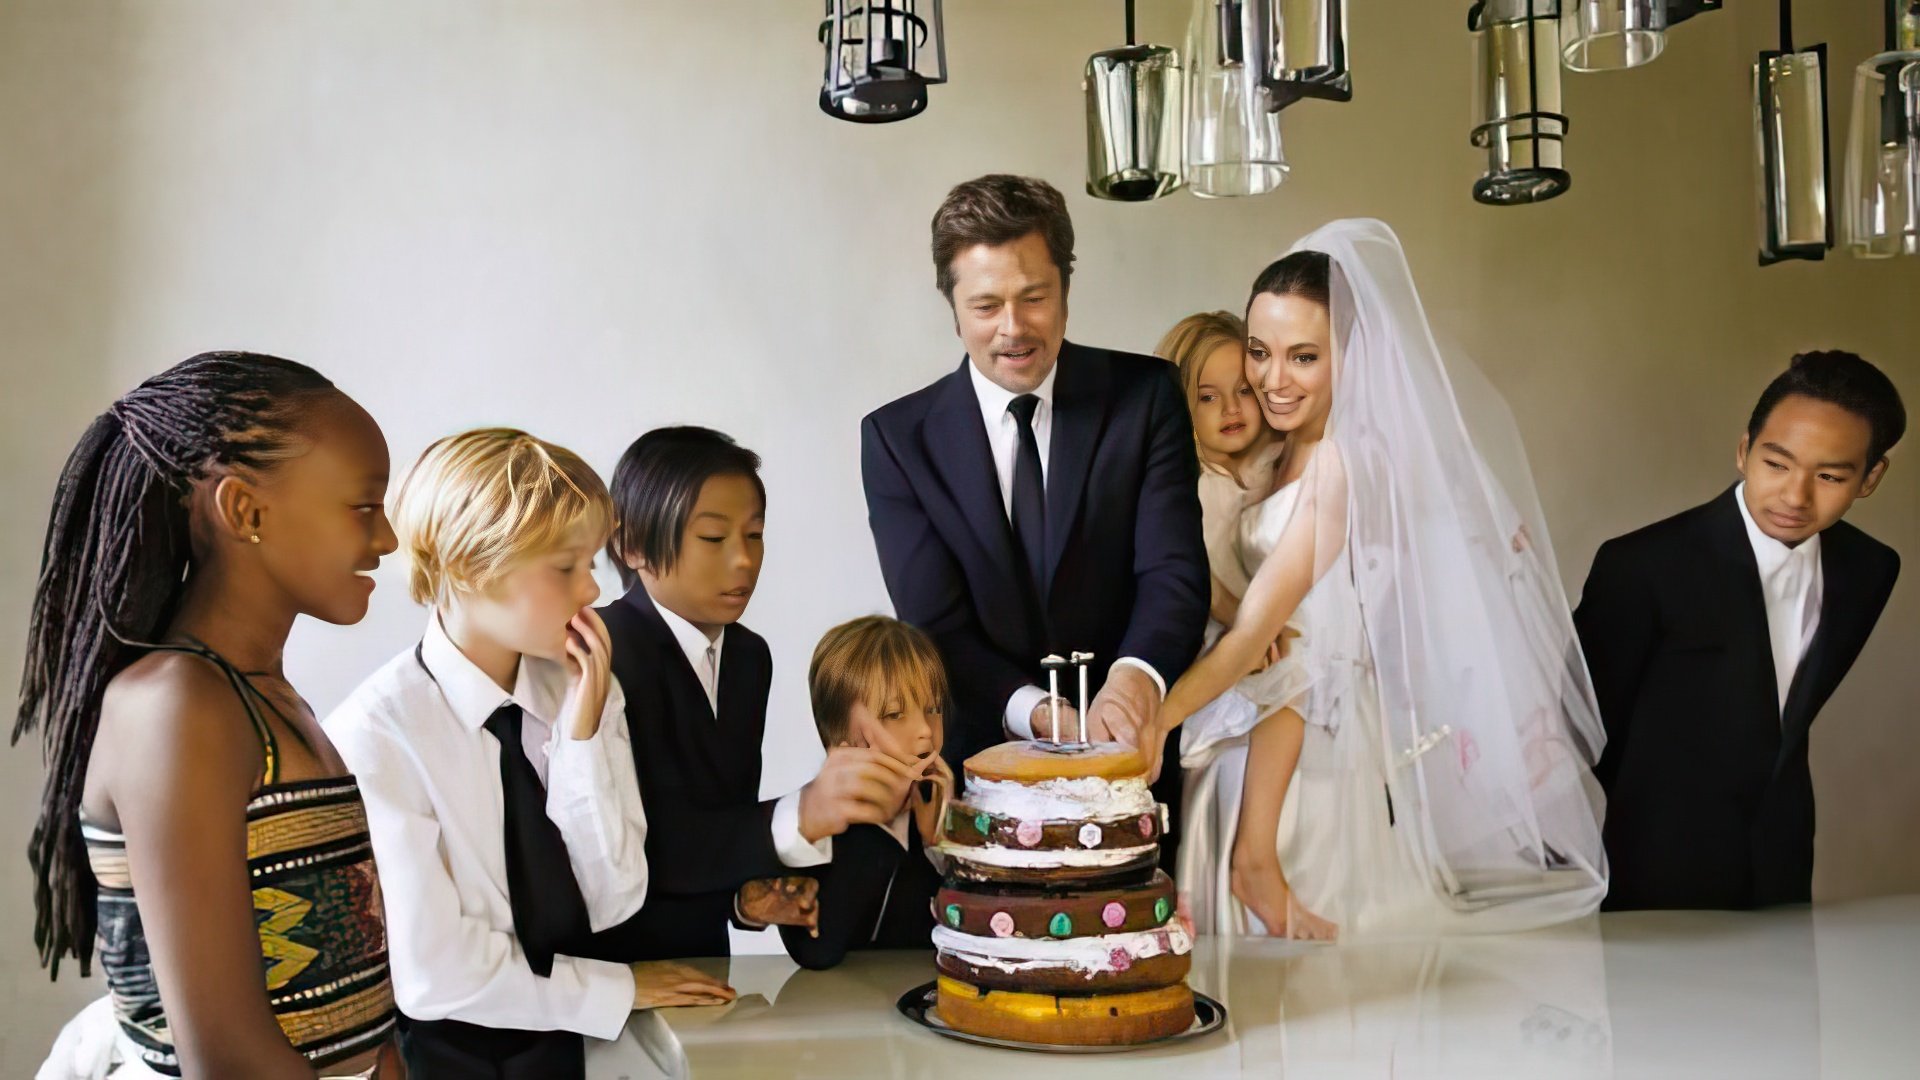 Angelina Jolie and Brad Pitt wedding was celebrated on August, 2014